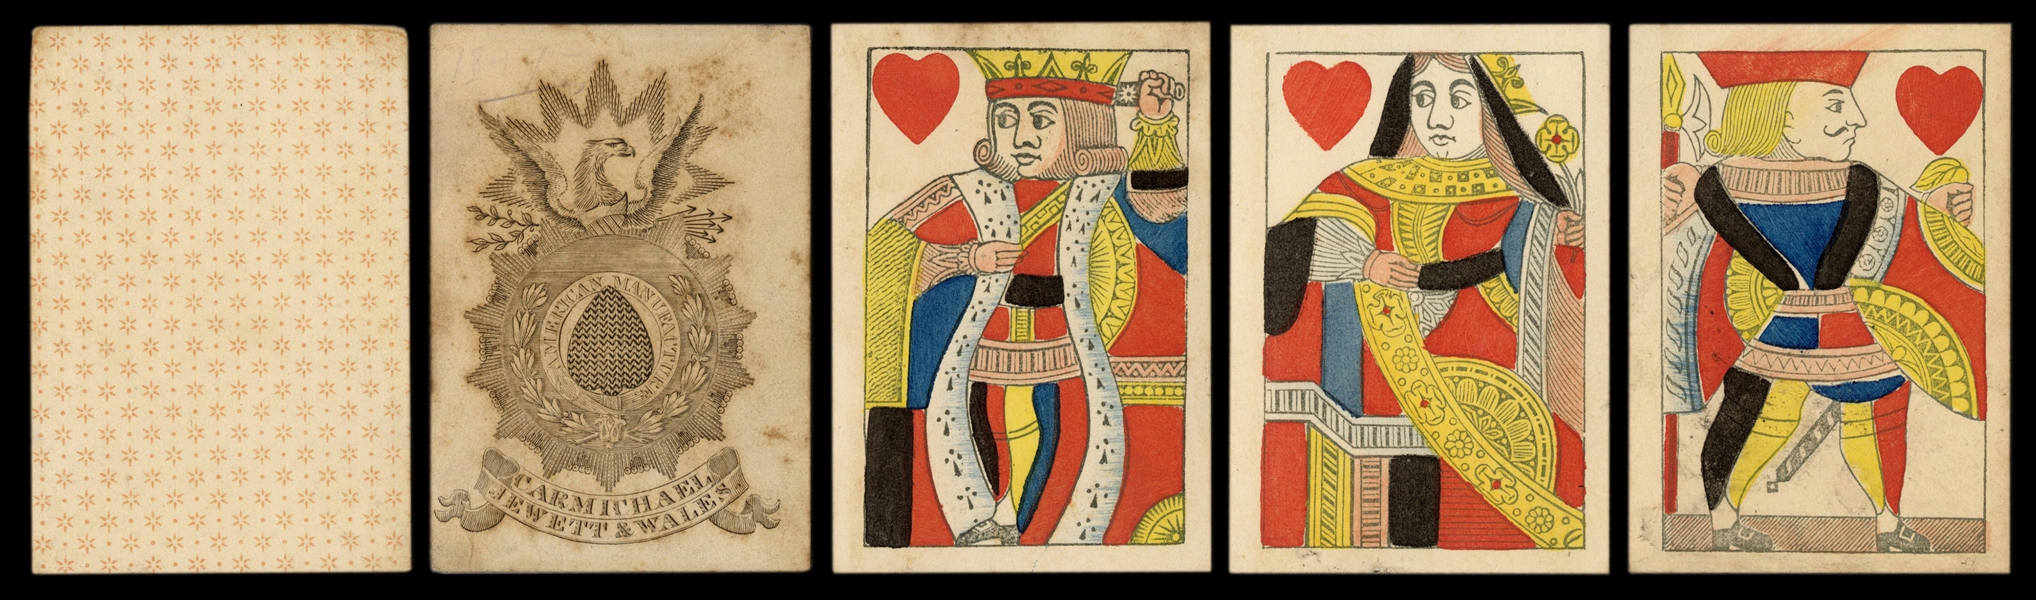  Carmichael, Jewett & Wales Playing Cards. American, ca. 184...